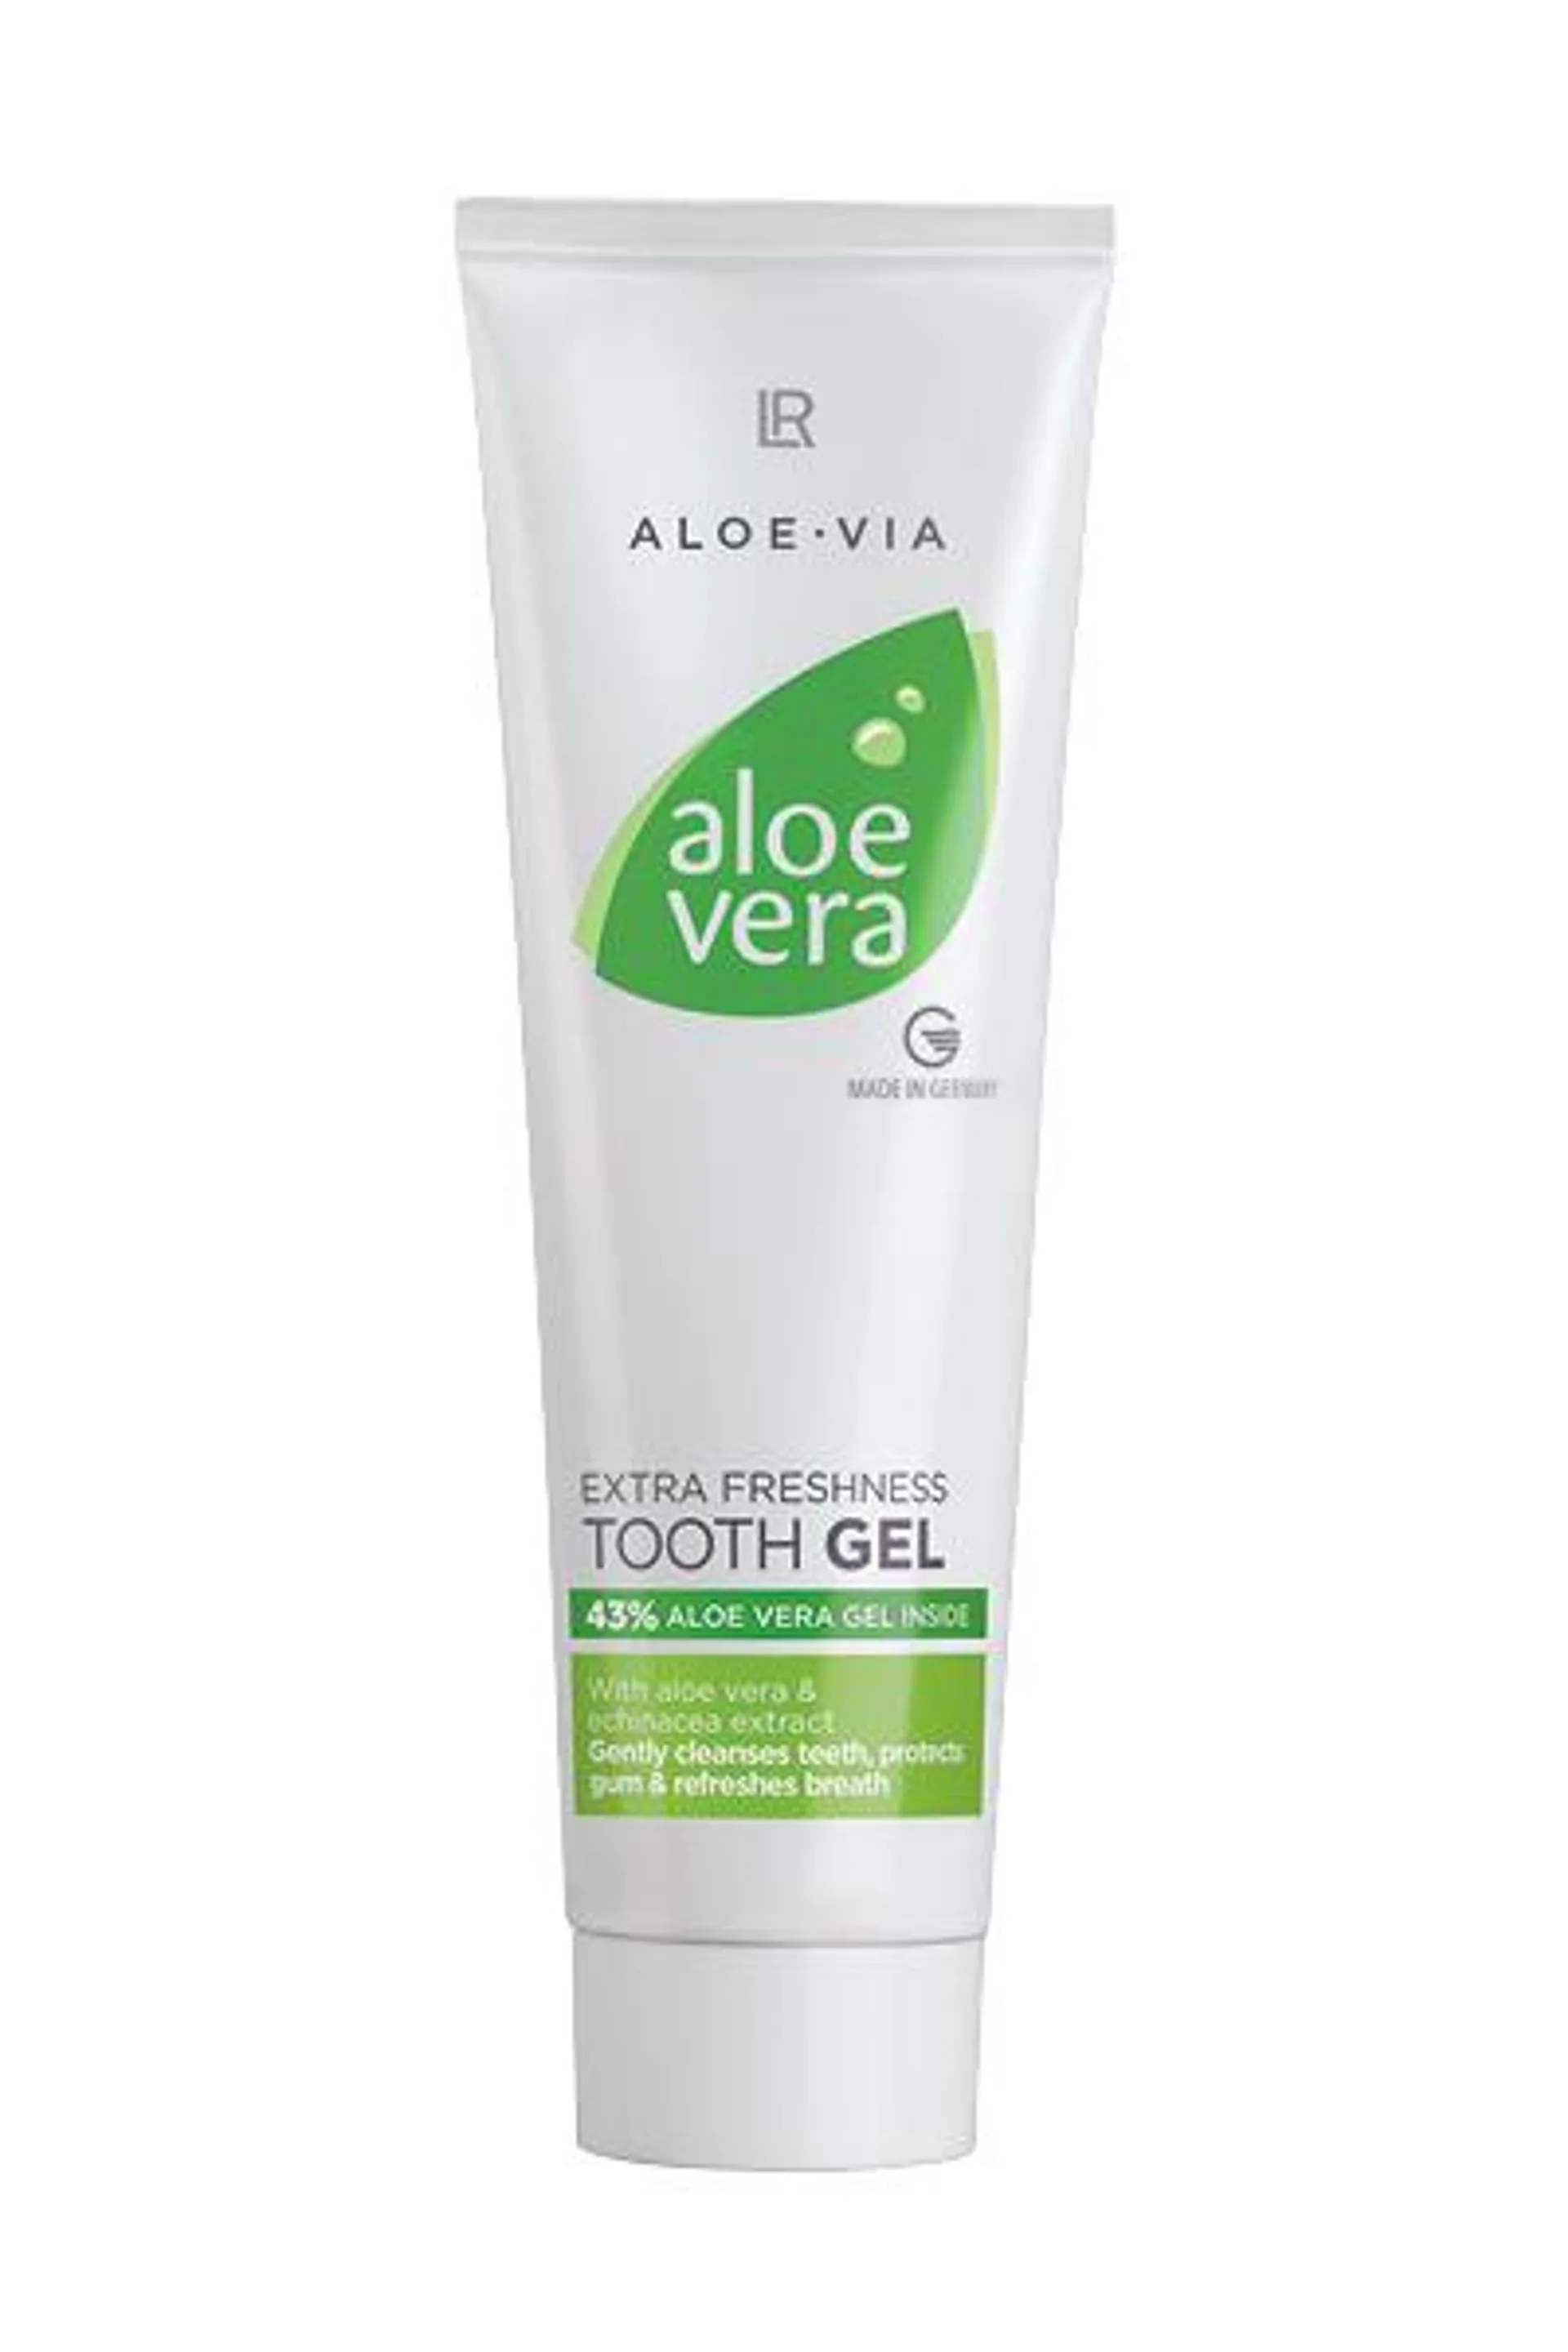 Aloe Vera - Gel Dental Extrafresco